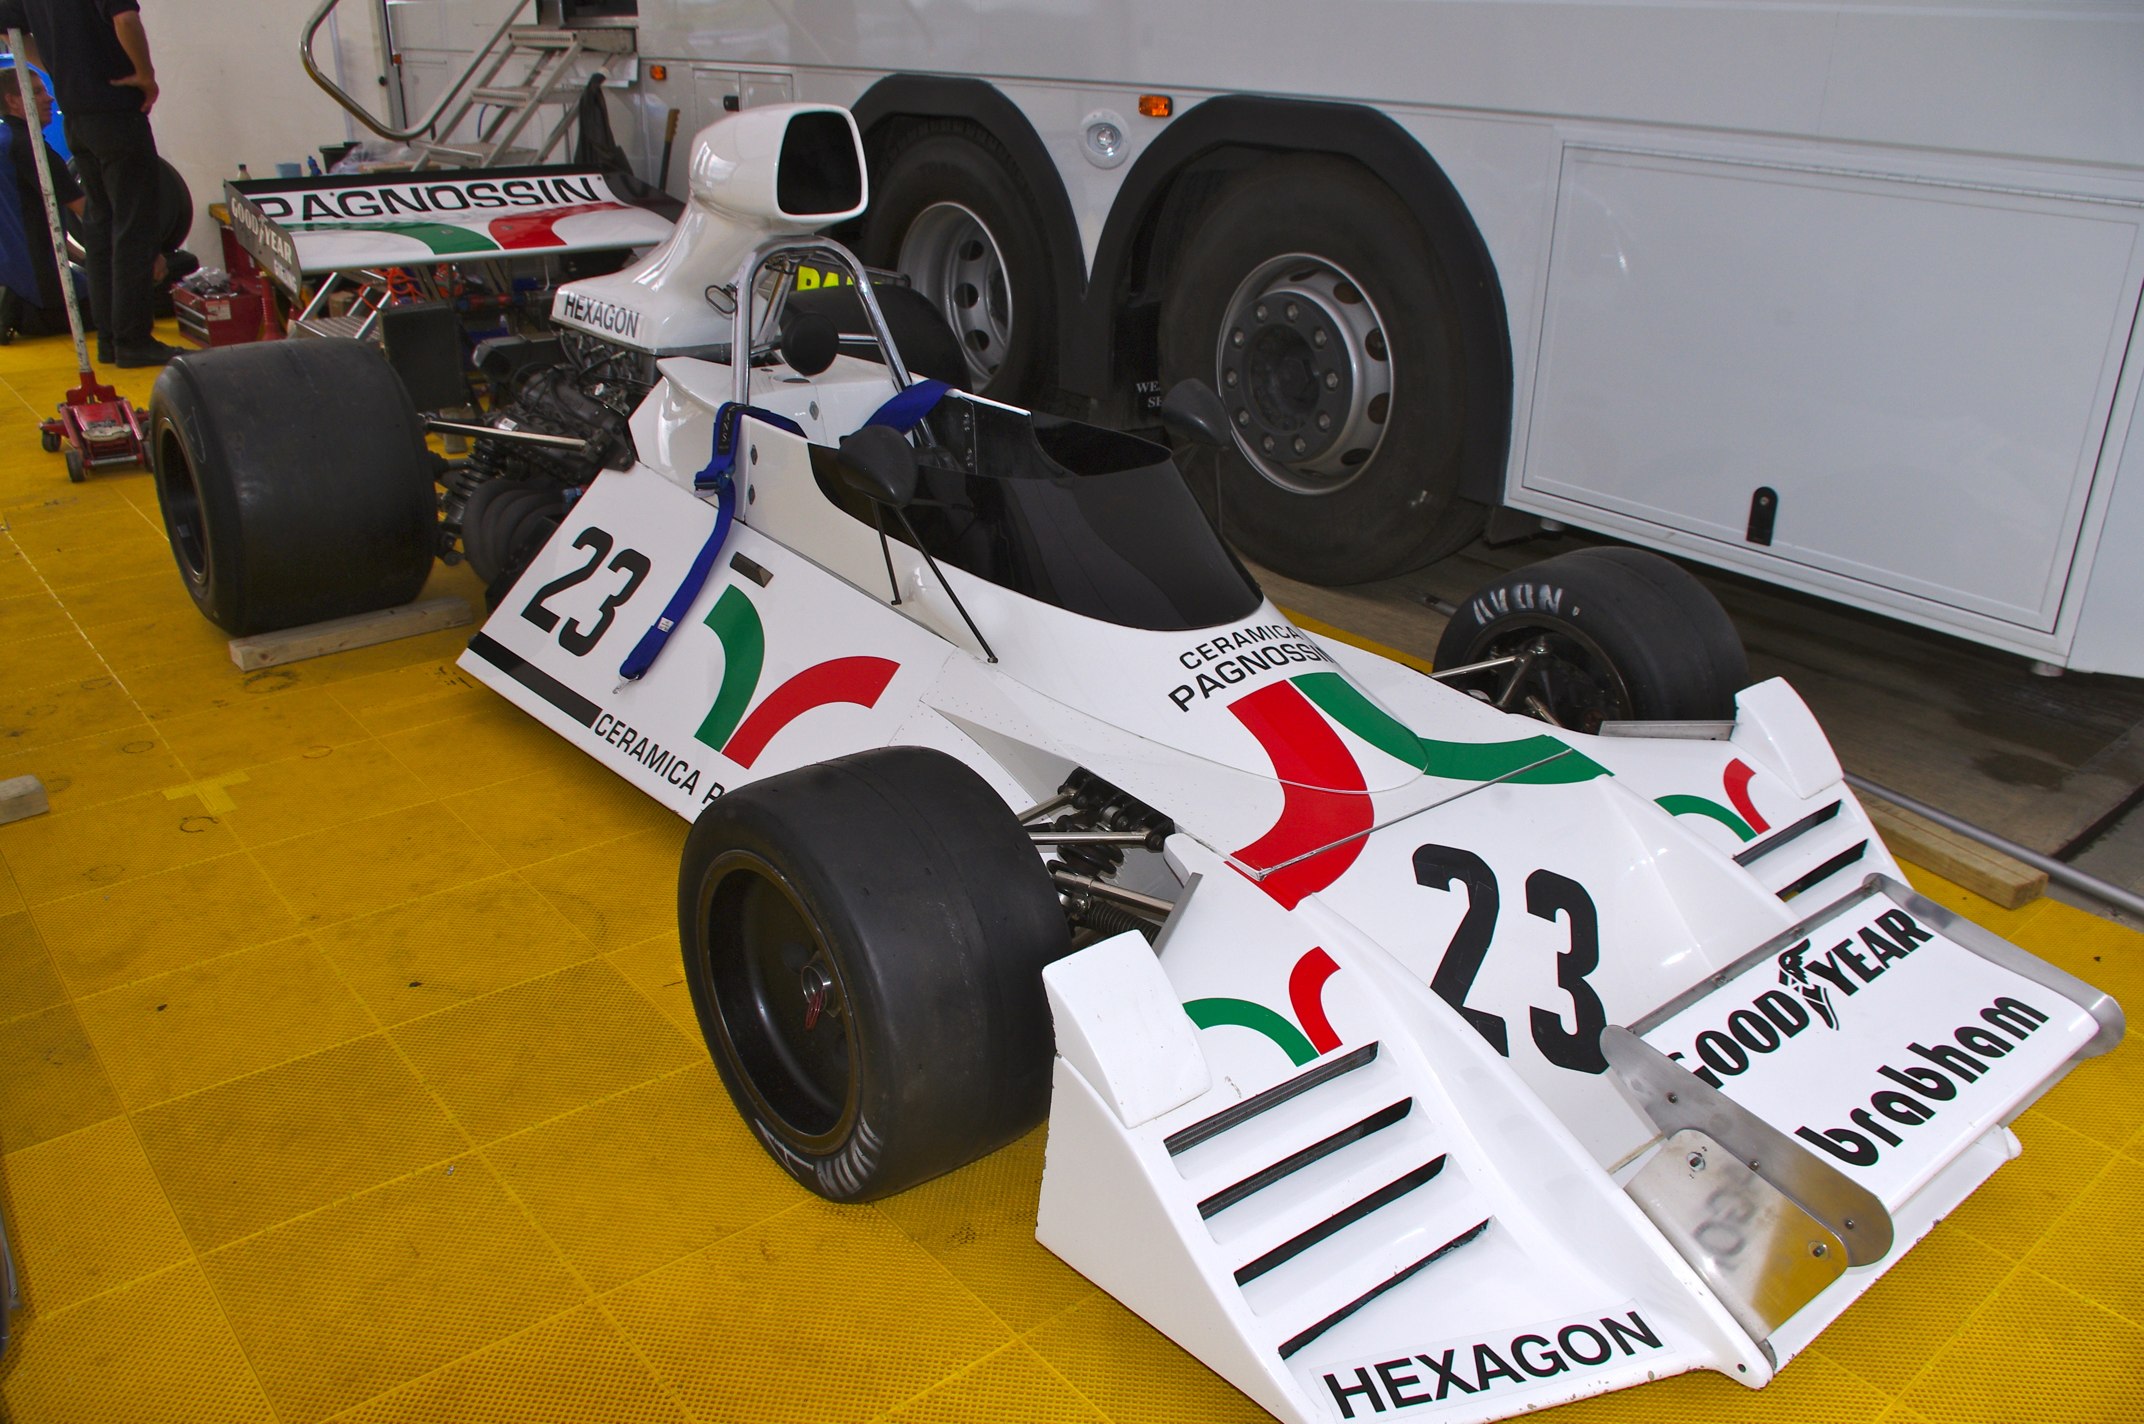 File:Brabham BT42 at Silverstone Classic 2011.jpg - Wikimedia Commons